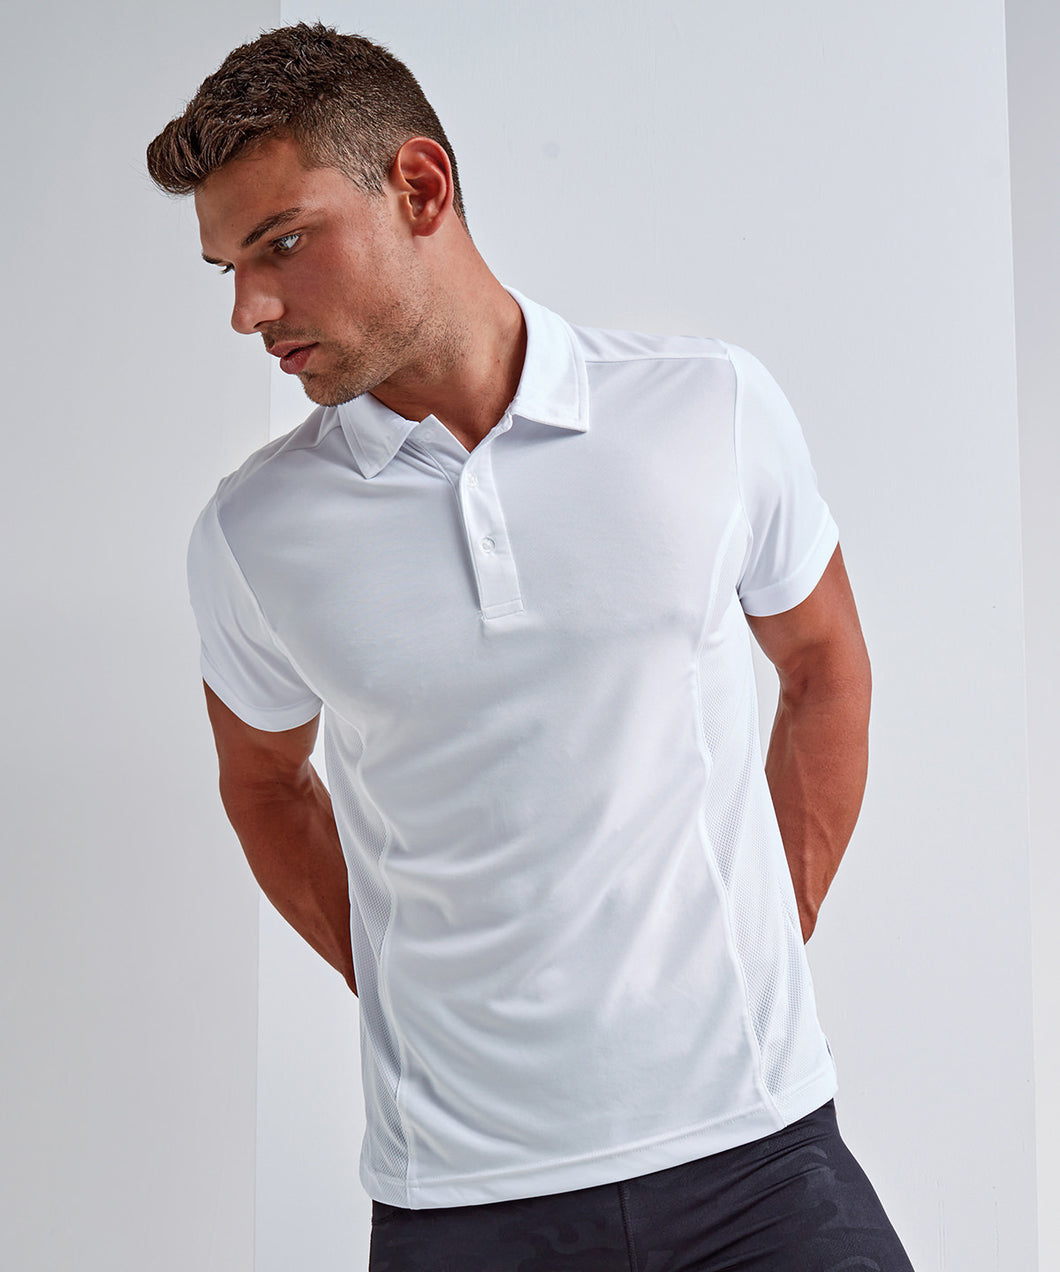 Validate Men's Technical Polo Shirt White